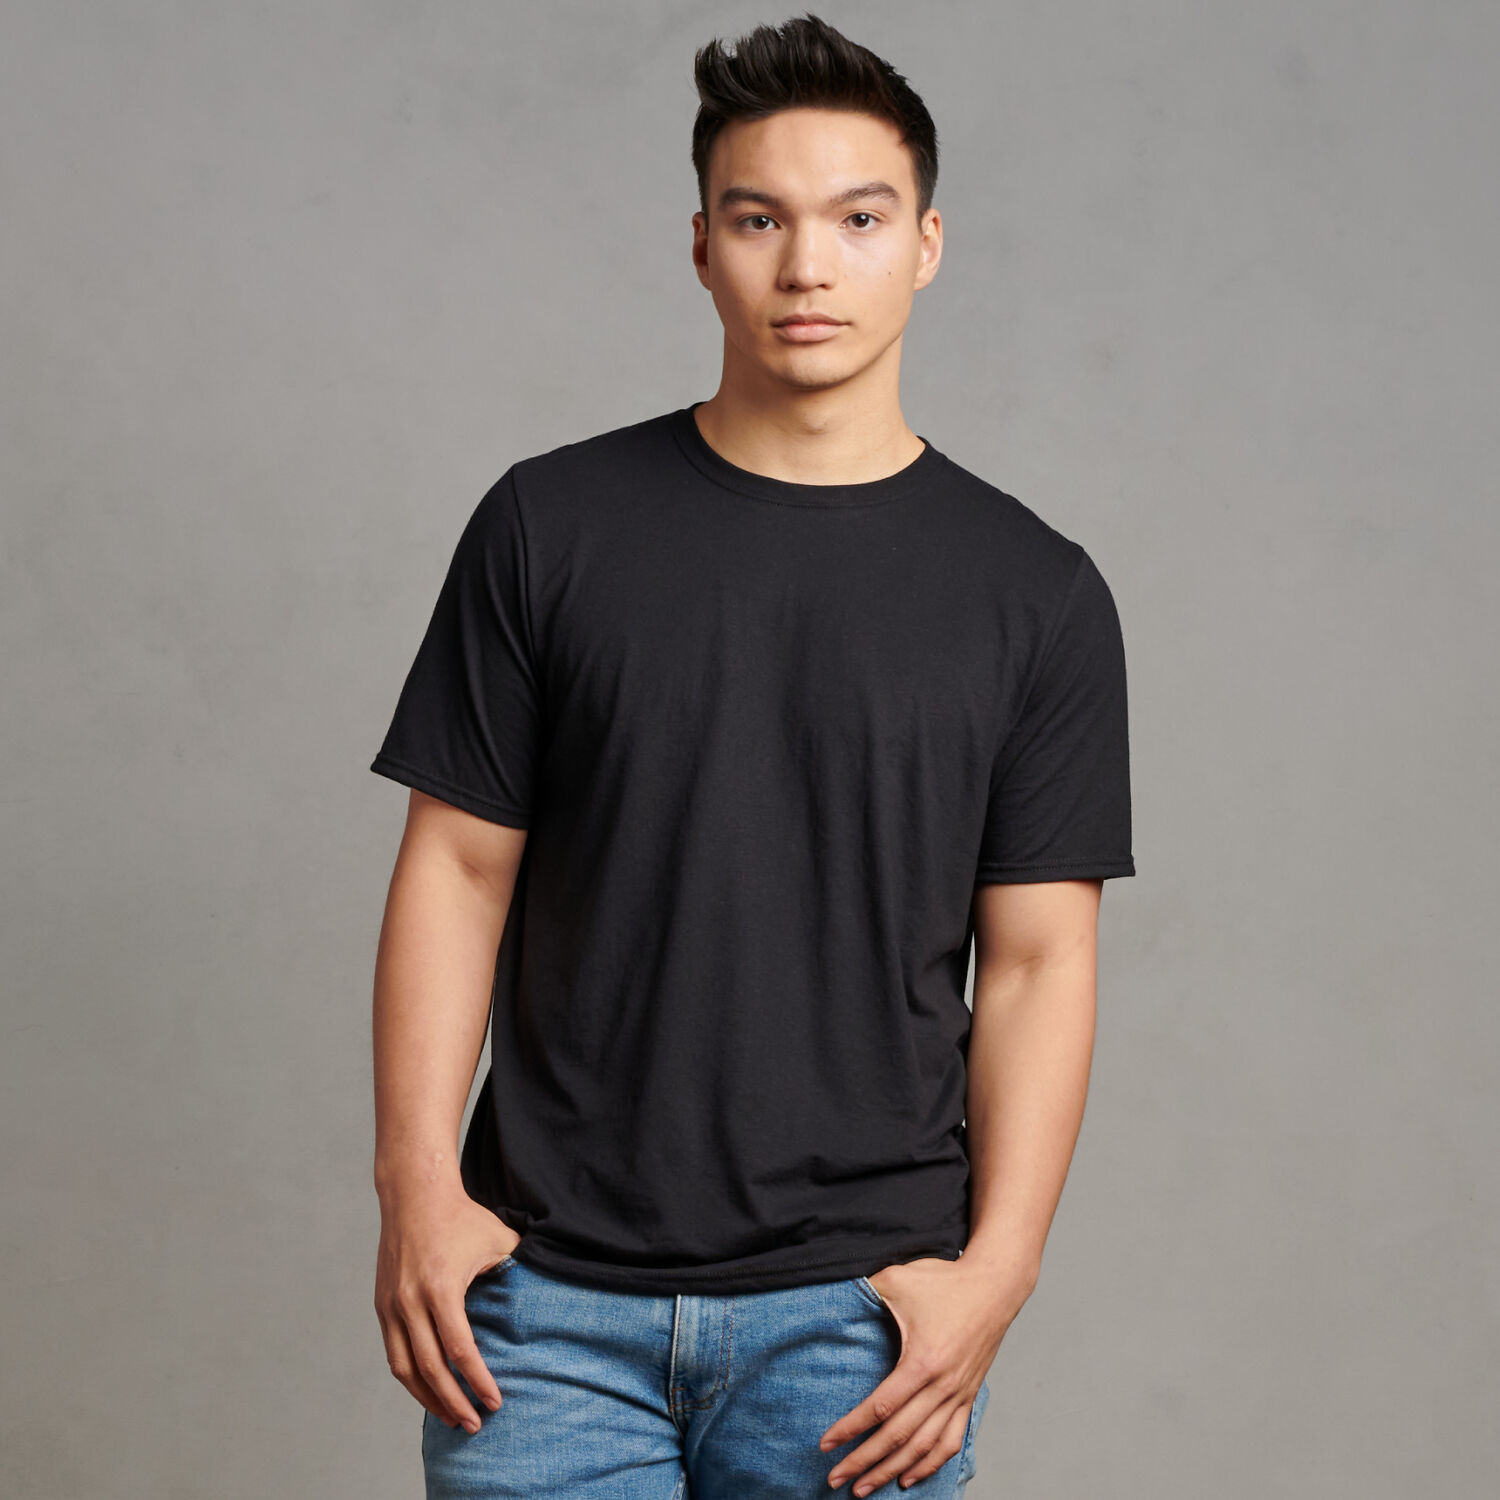 Men's Cotton Performance T-Shirt Black